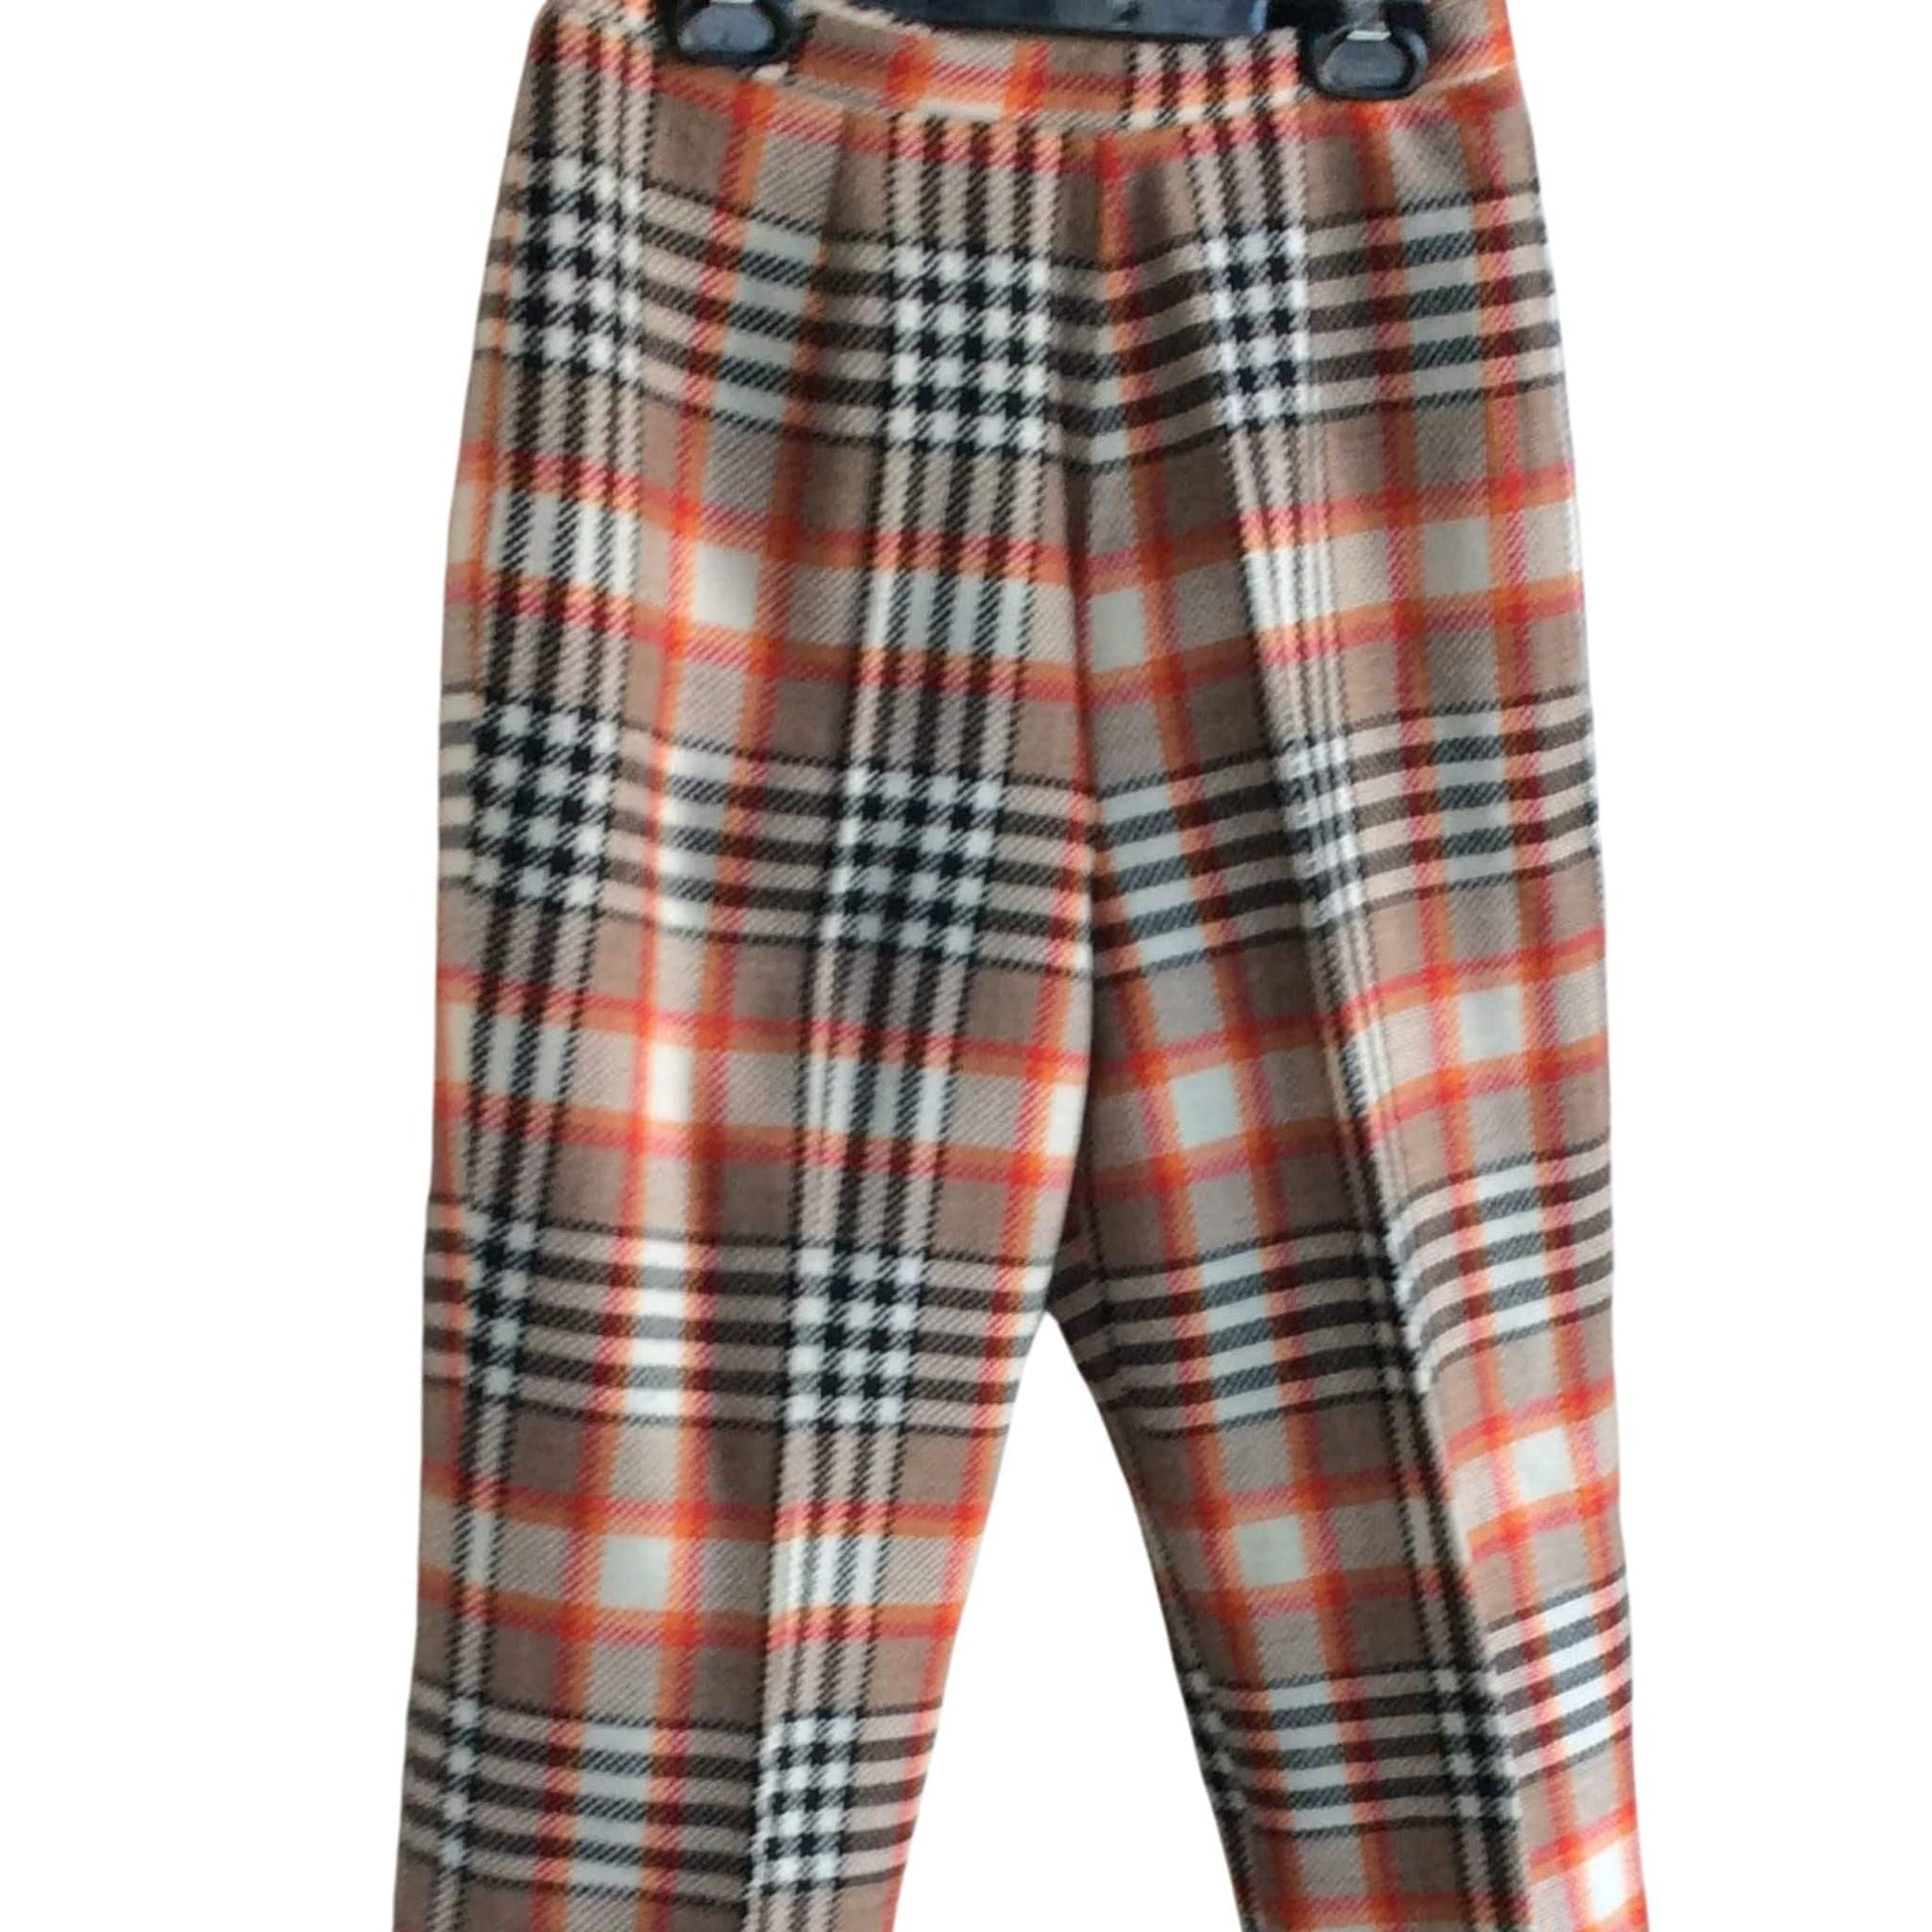 Vintage Checkered Pants